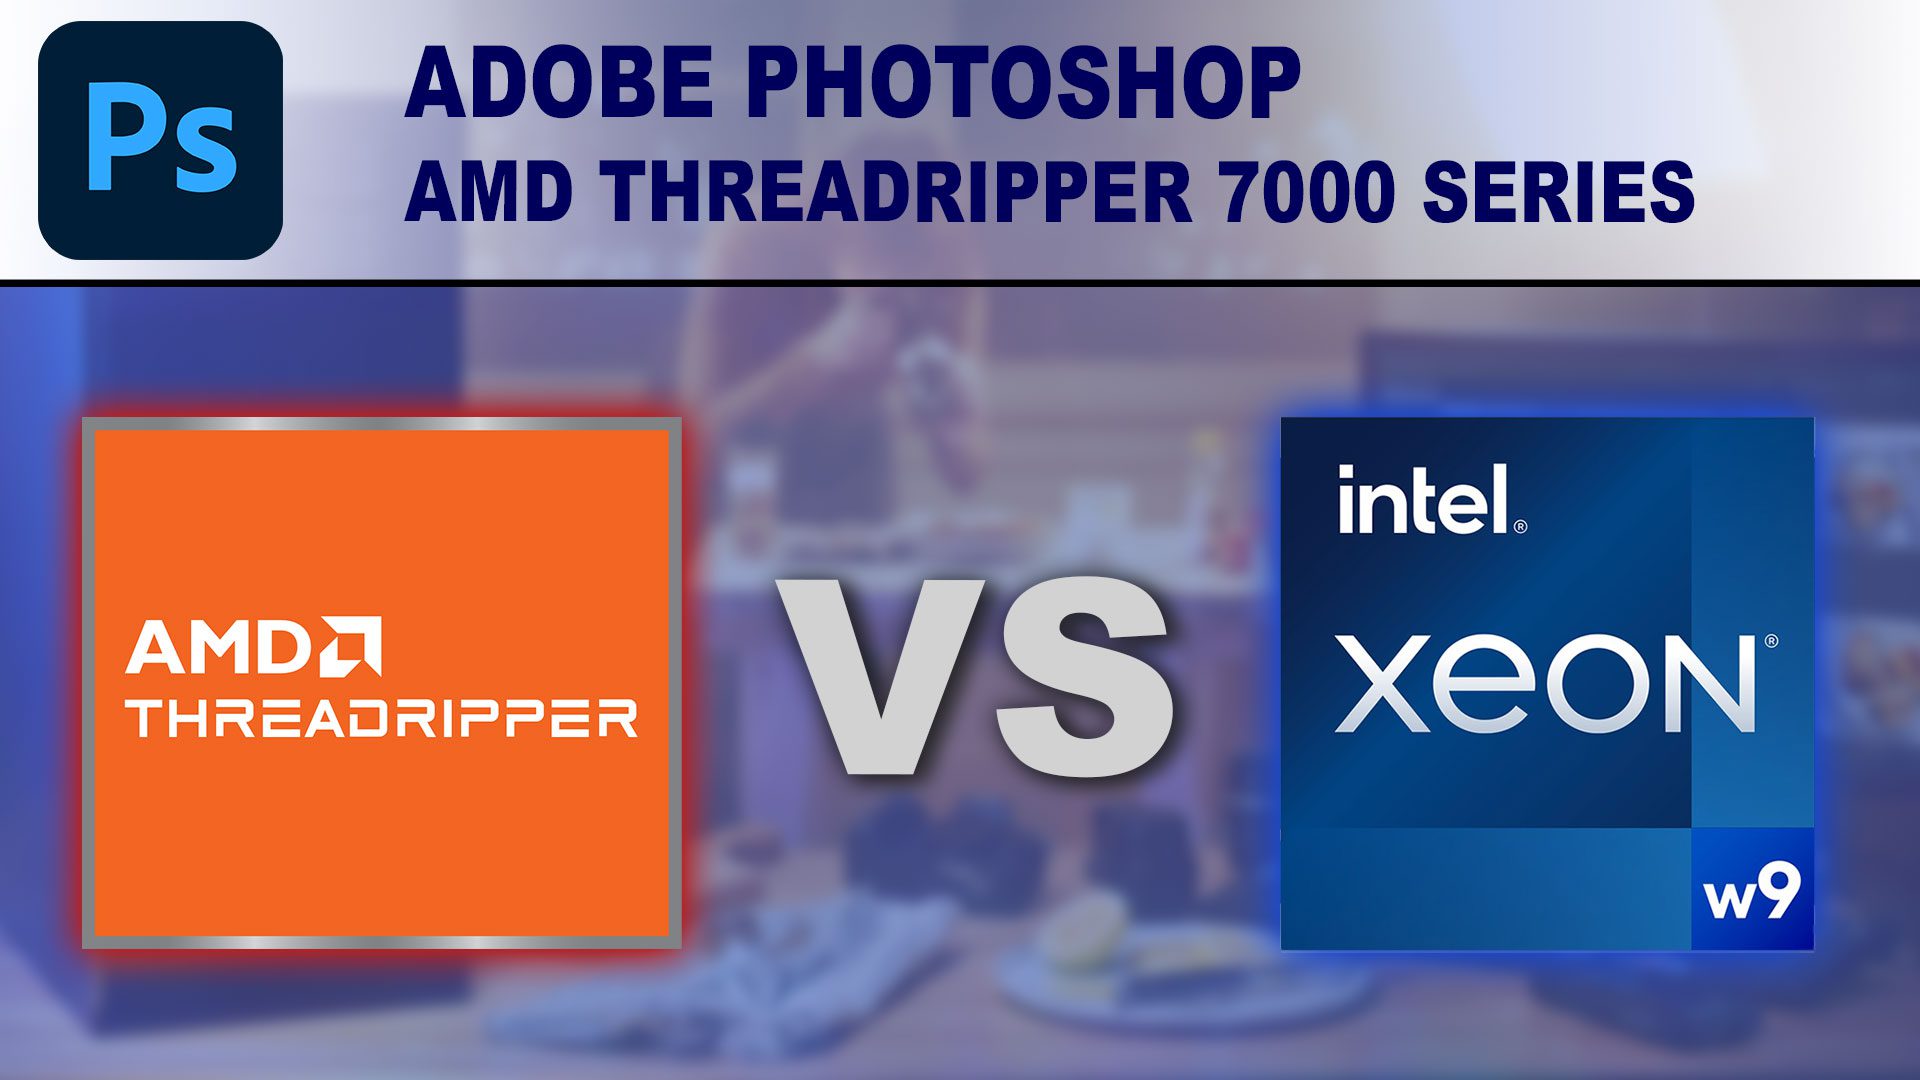 Decorative Image: Photoshop - AMD Threadripper vs Intel Xeon